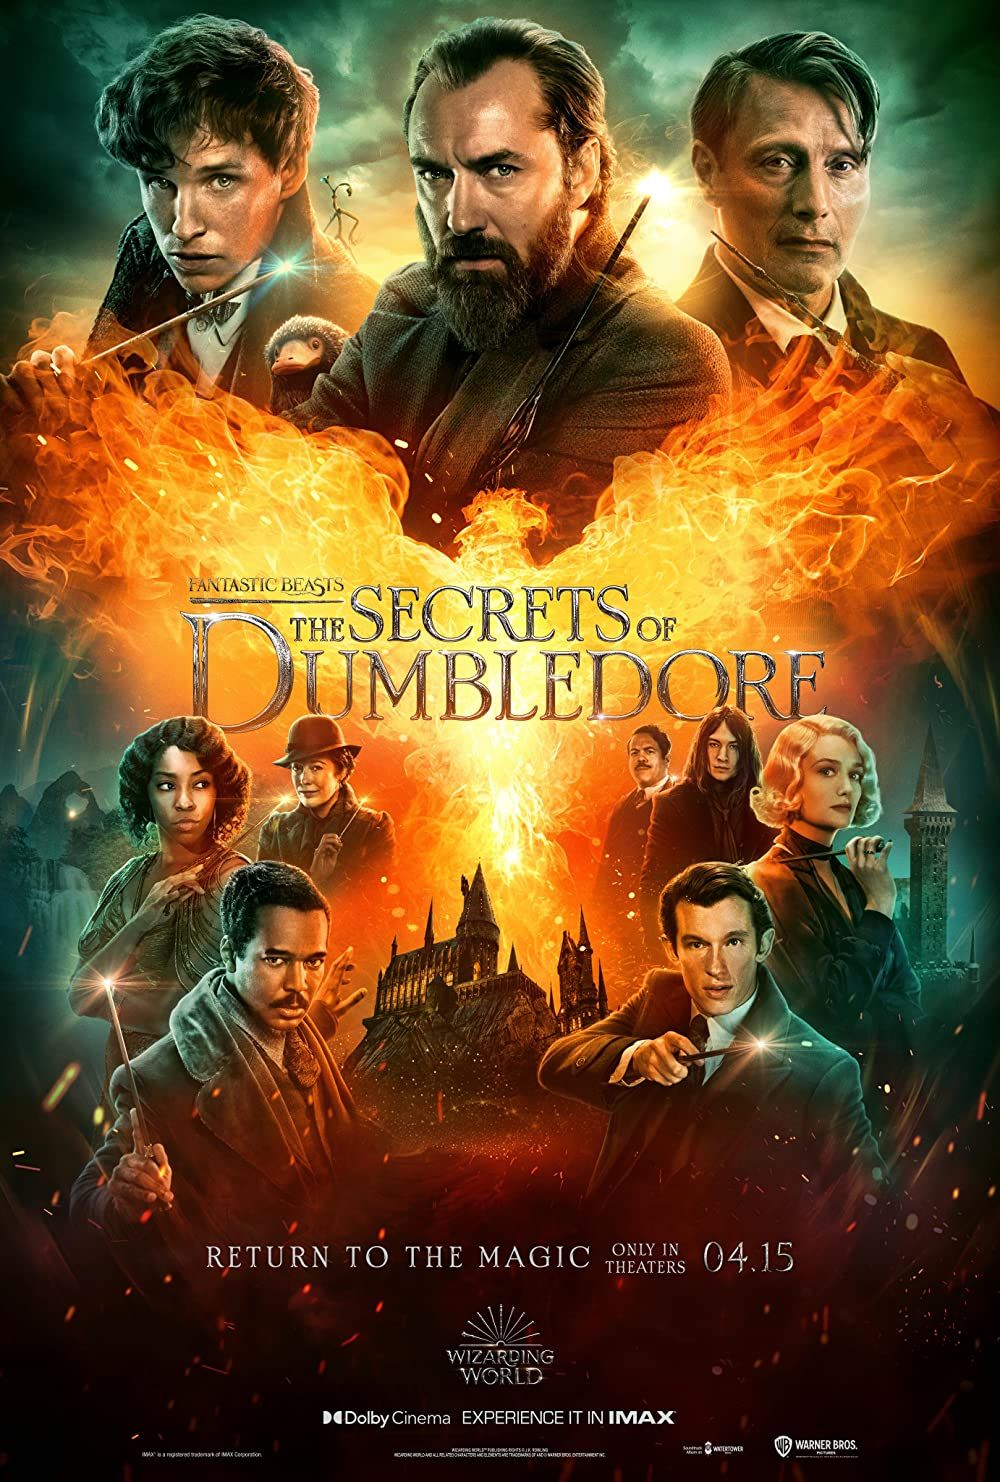 Fantastic Beasts 3 Beasts The Secrets of Dumbledore (2022) Hindi Dubbed HMAX HDRip download full movie